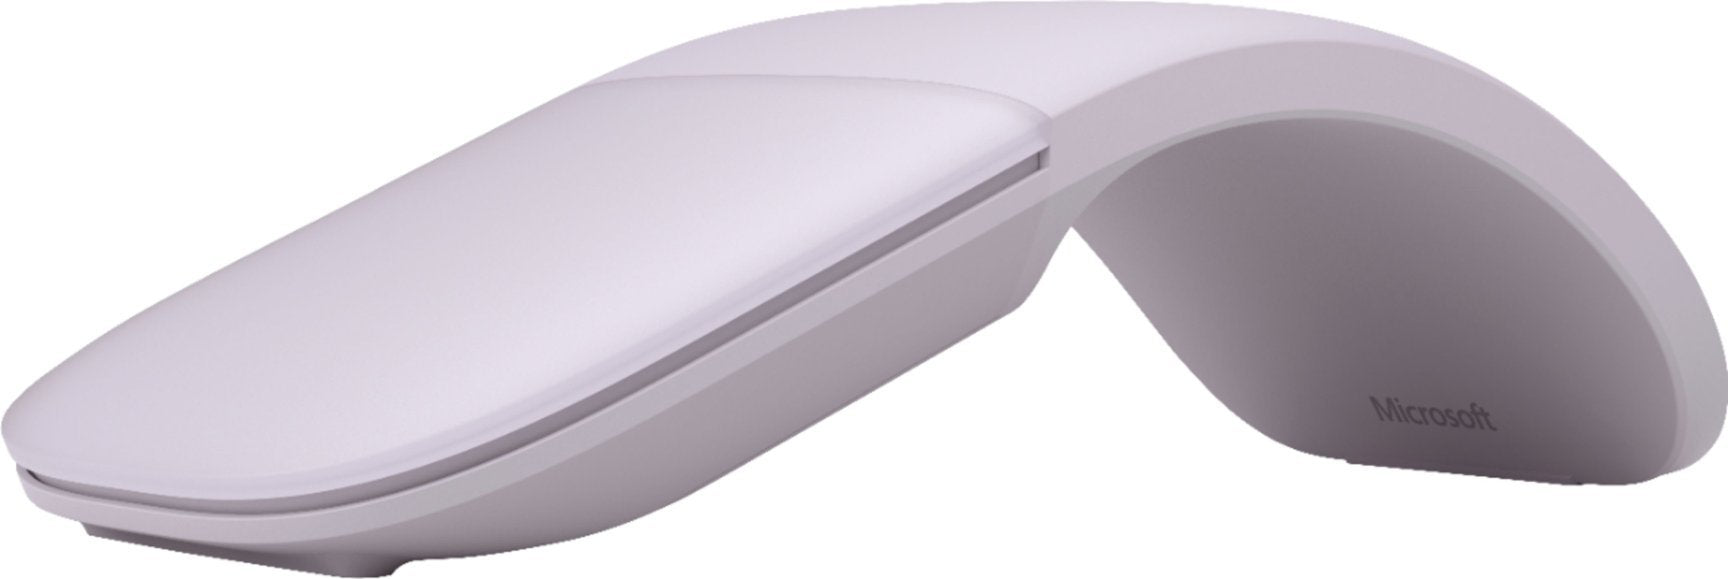 Microsoft - ELG-00026 Arc Wireless BlueTrack Ambidextrous Mouse - Lilac